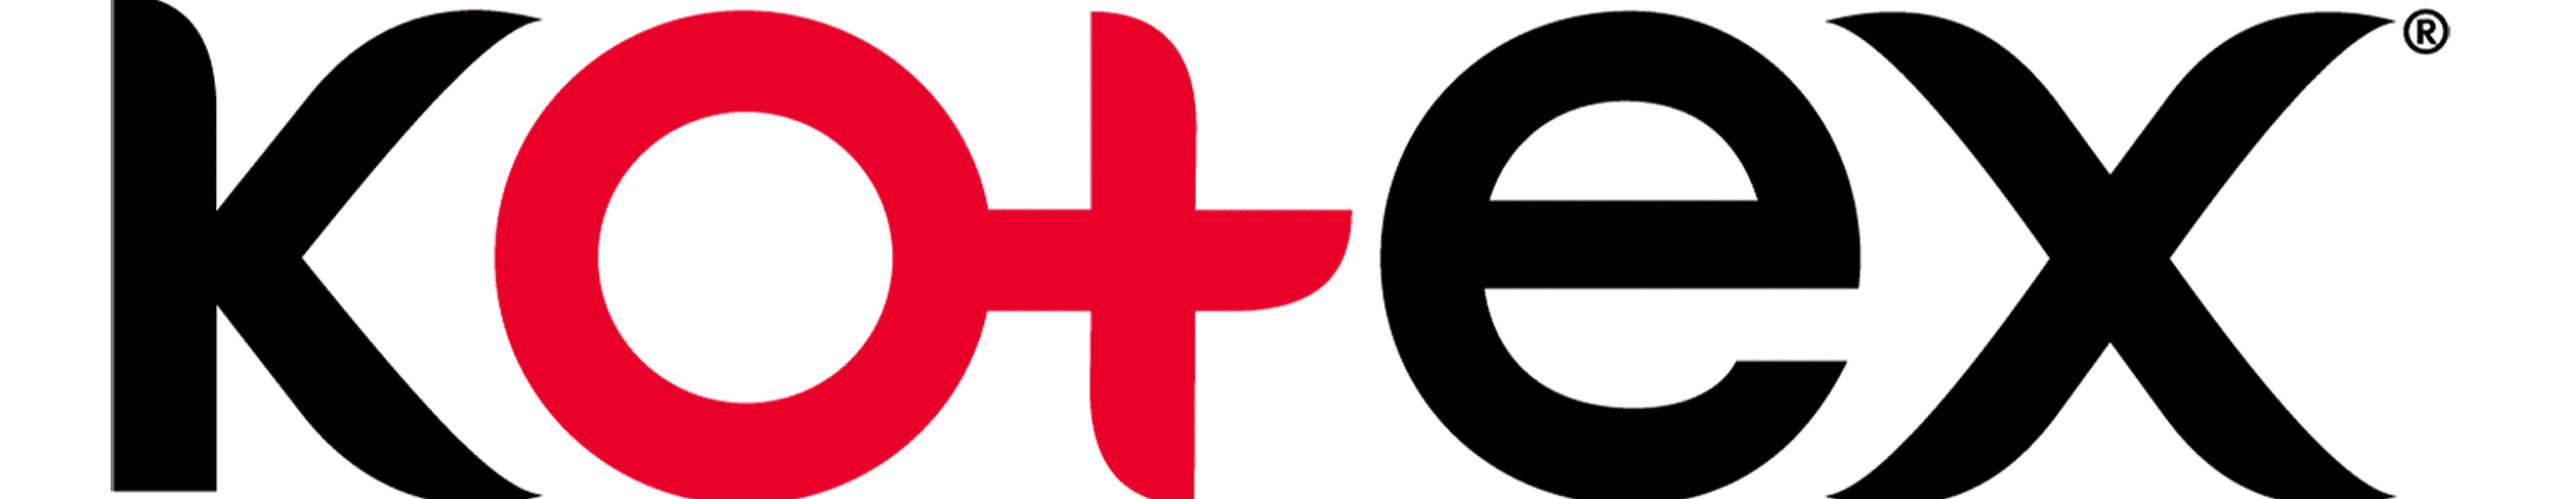 Kotex-Logo